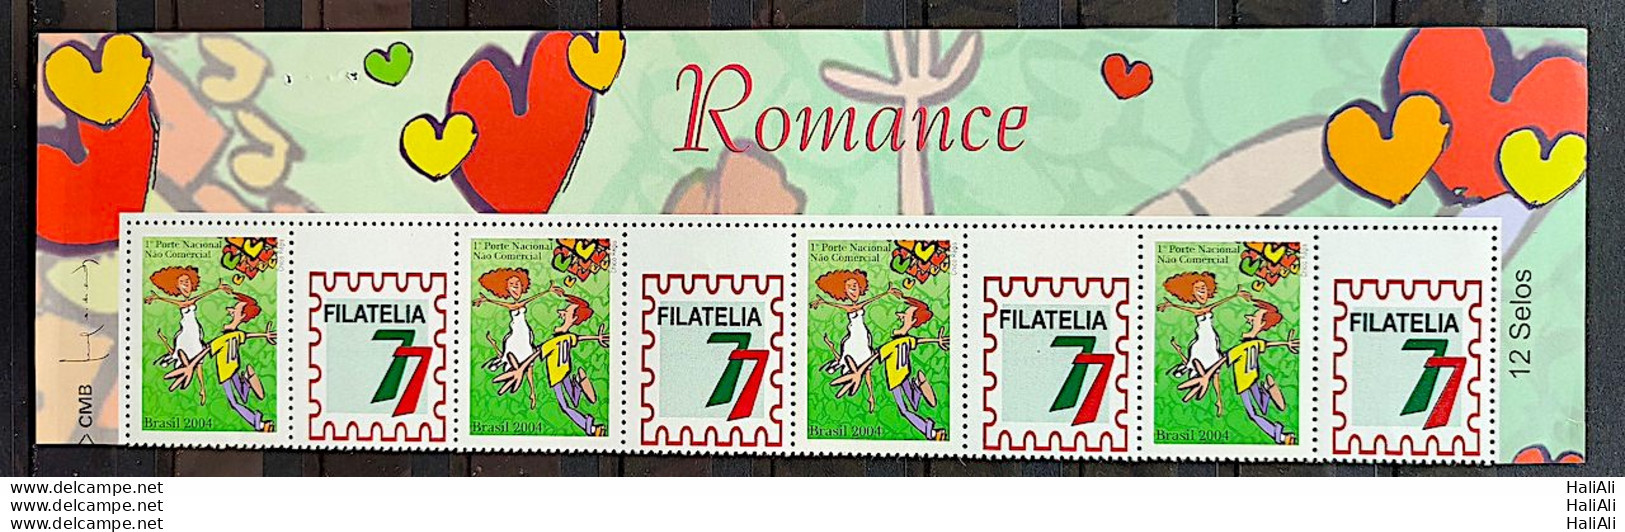 C 2558 Brazil Personalized Stamp Romance Hug 2004 3 With Vignette - Personnalisés